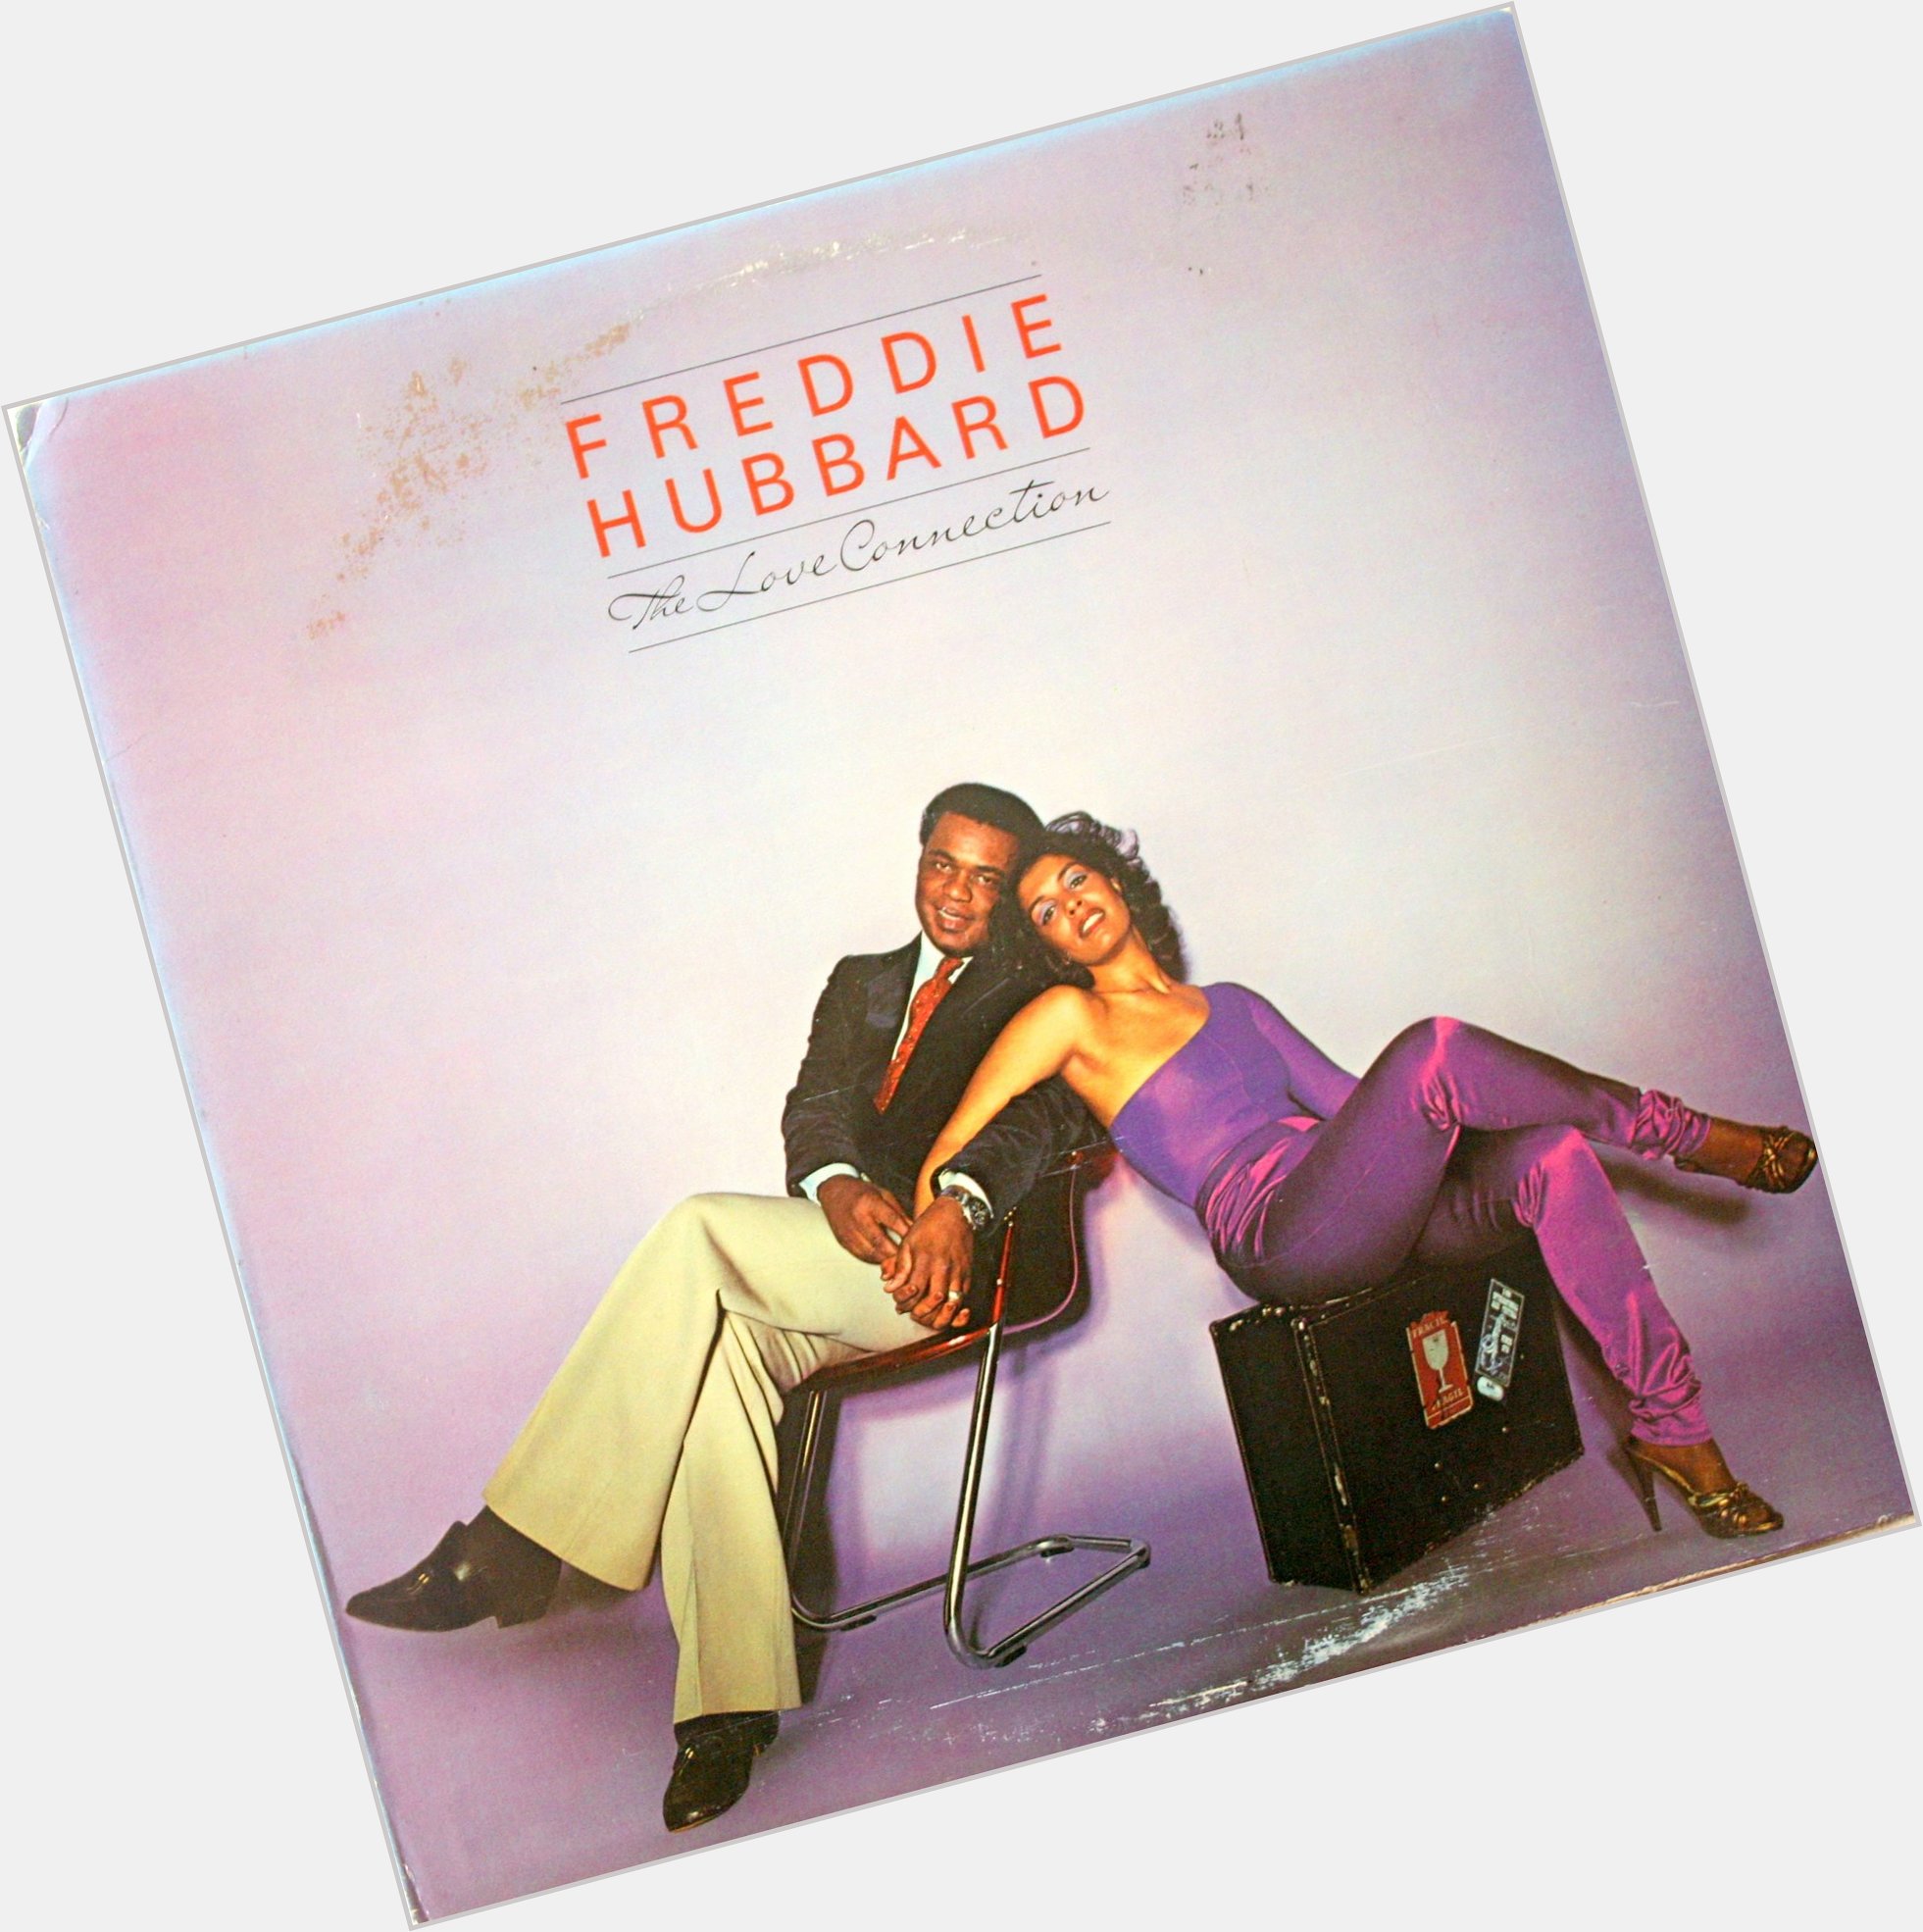 Freddie Hubbard dating 2